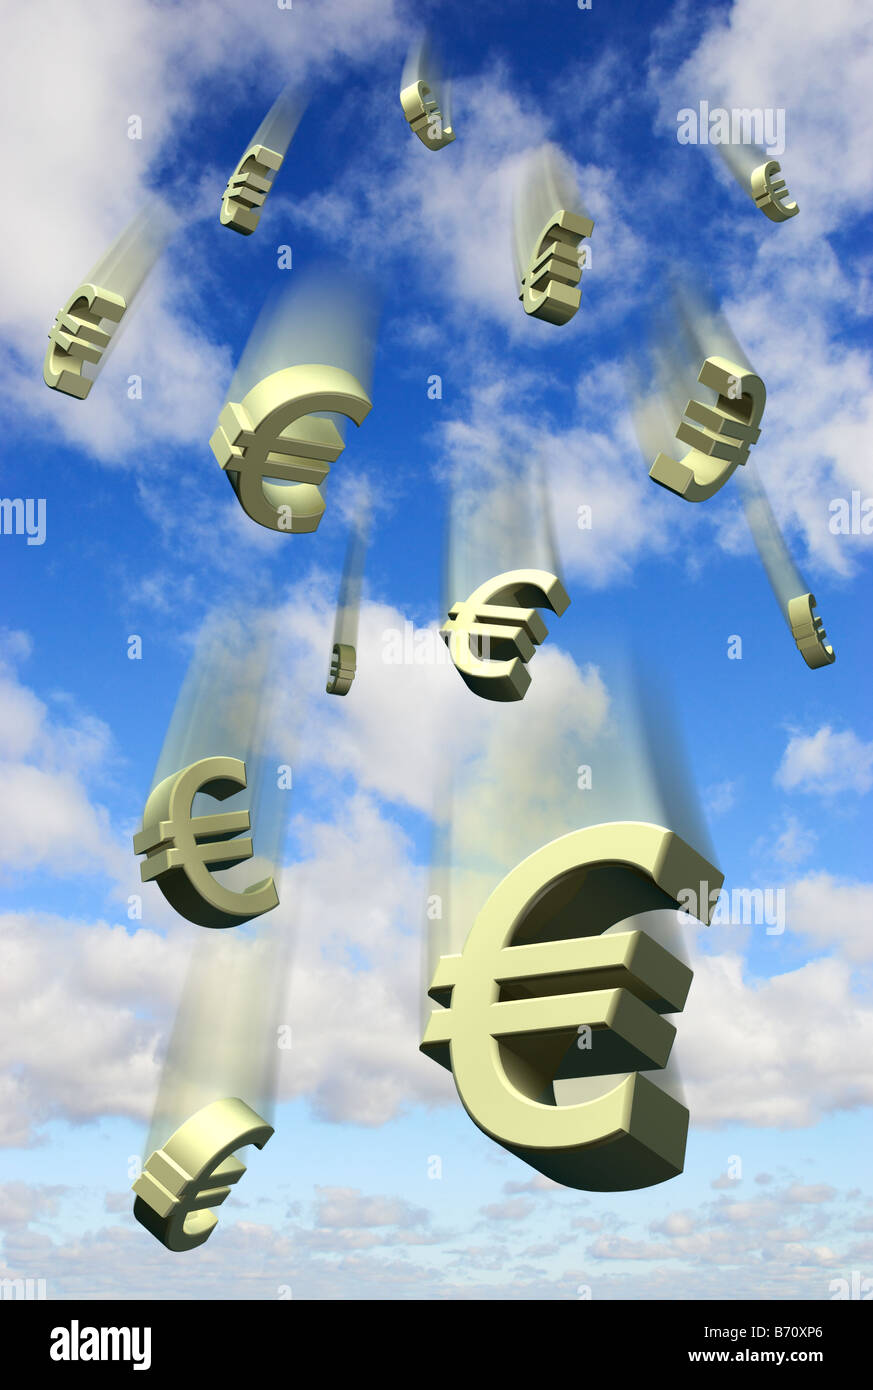 Falling Euro symbols against a blue sky - digital composite Stock Photo